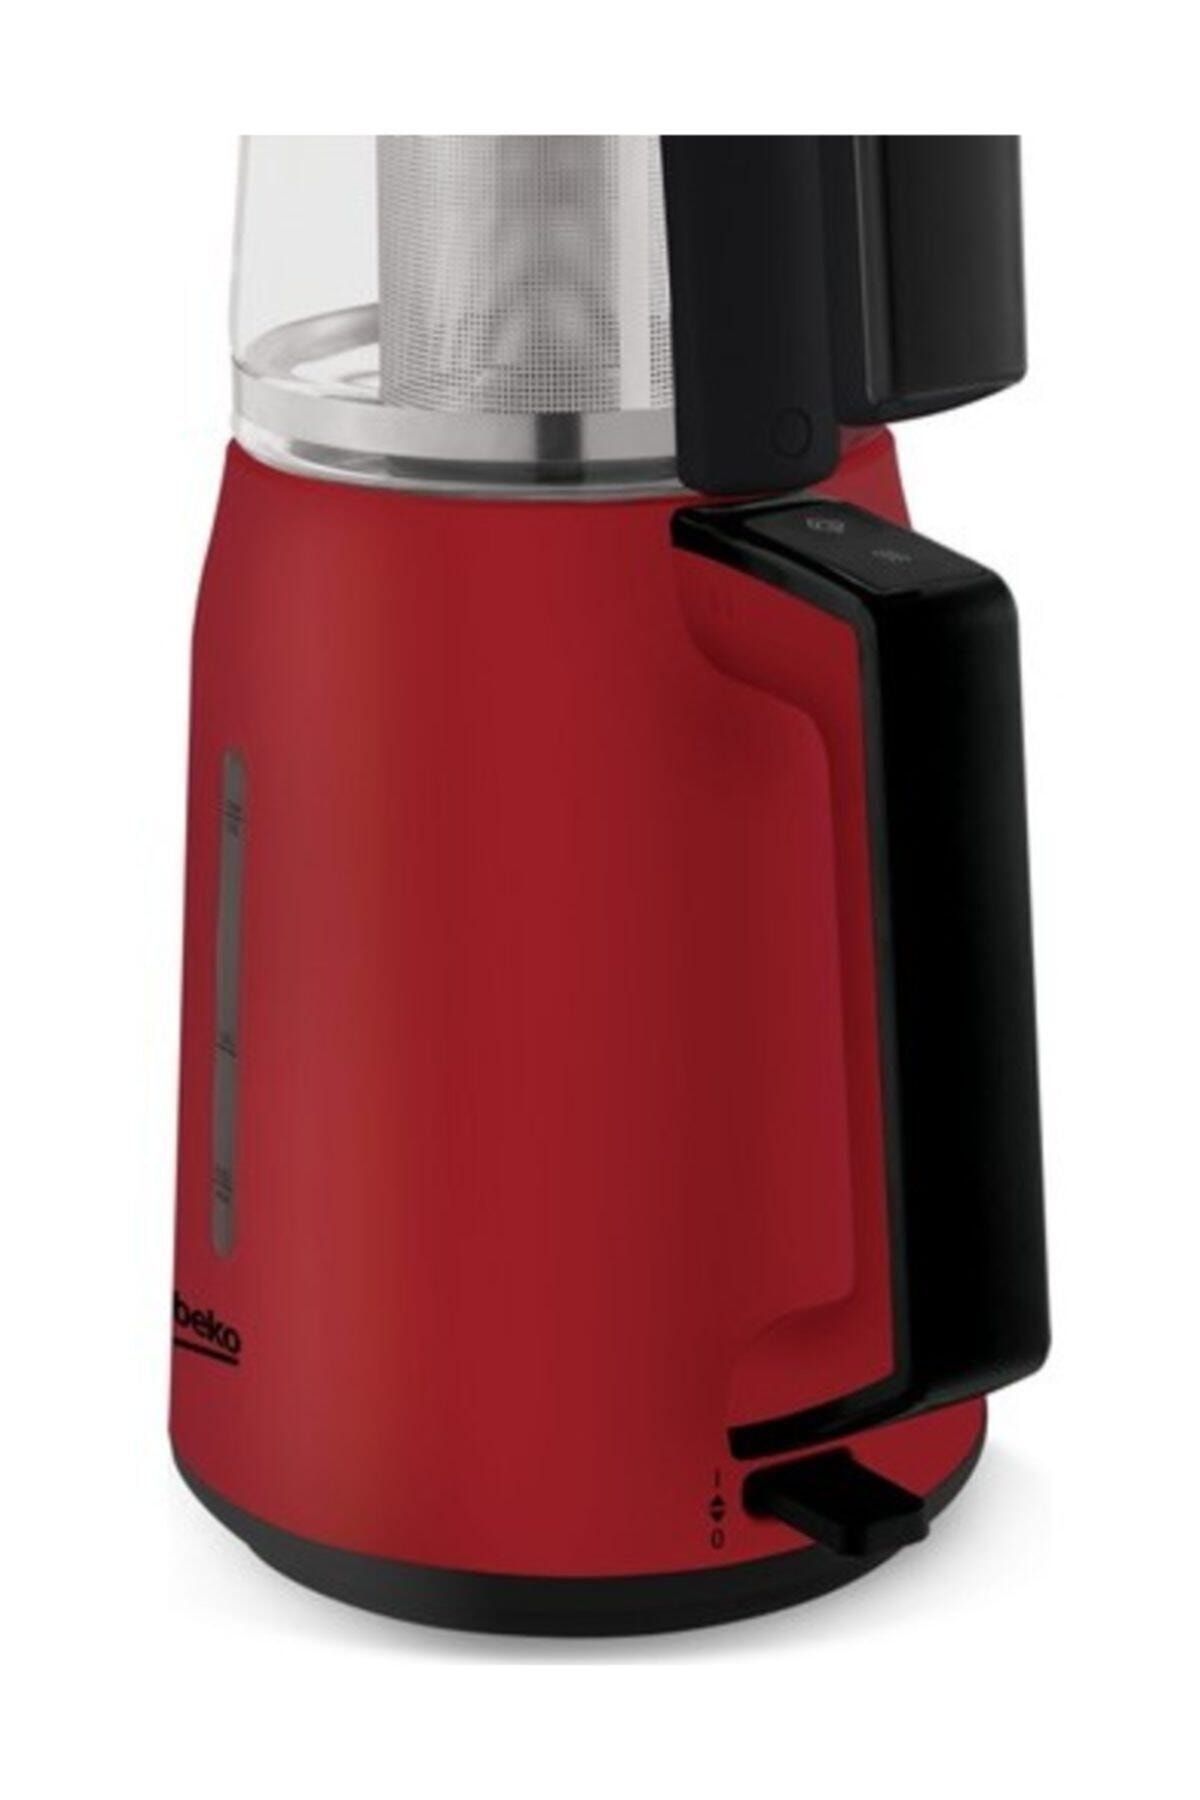 Beko Cm 2940 K 1750 Watt Kırmızı Cam Demlikli Çay Makinesi